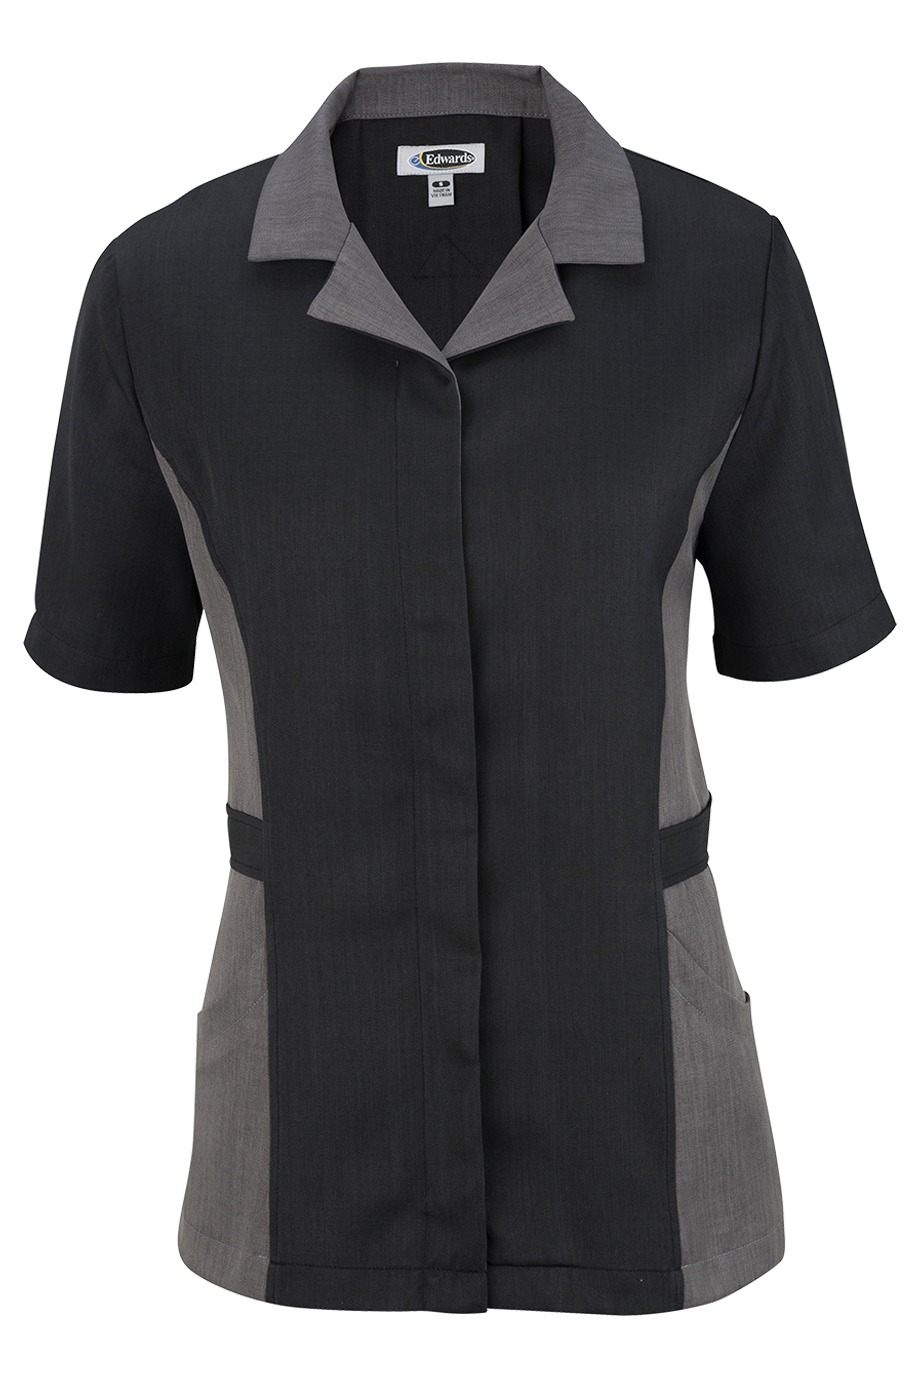 Edwards Garment 7890 - Premier Ladies Tunic